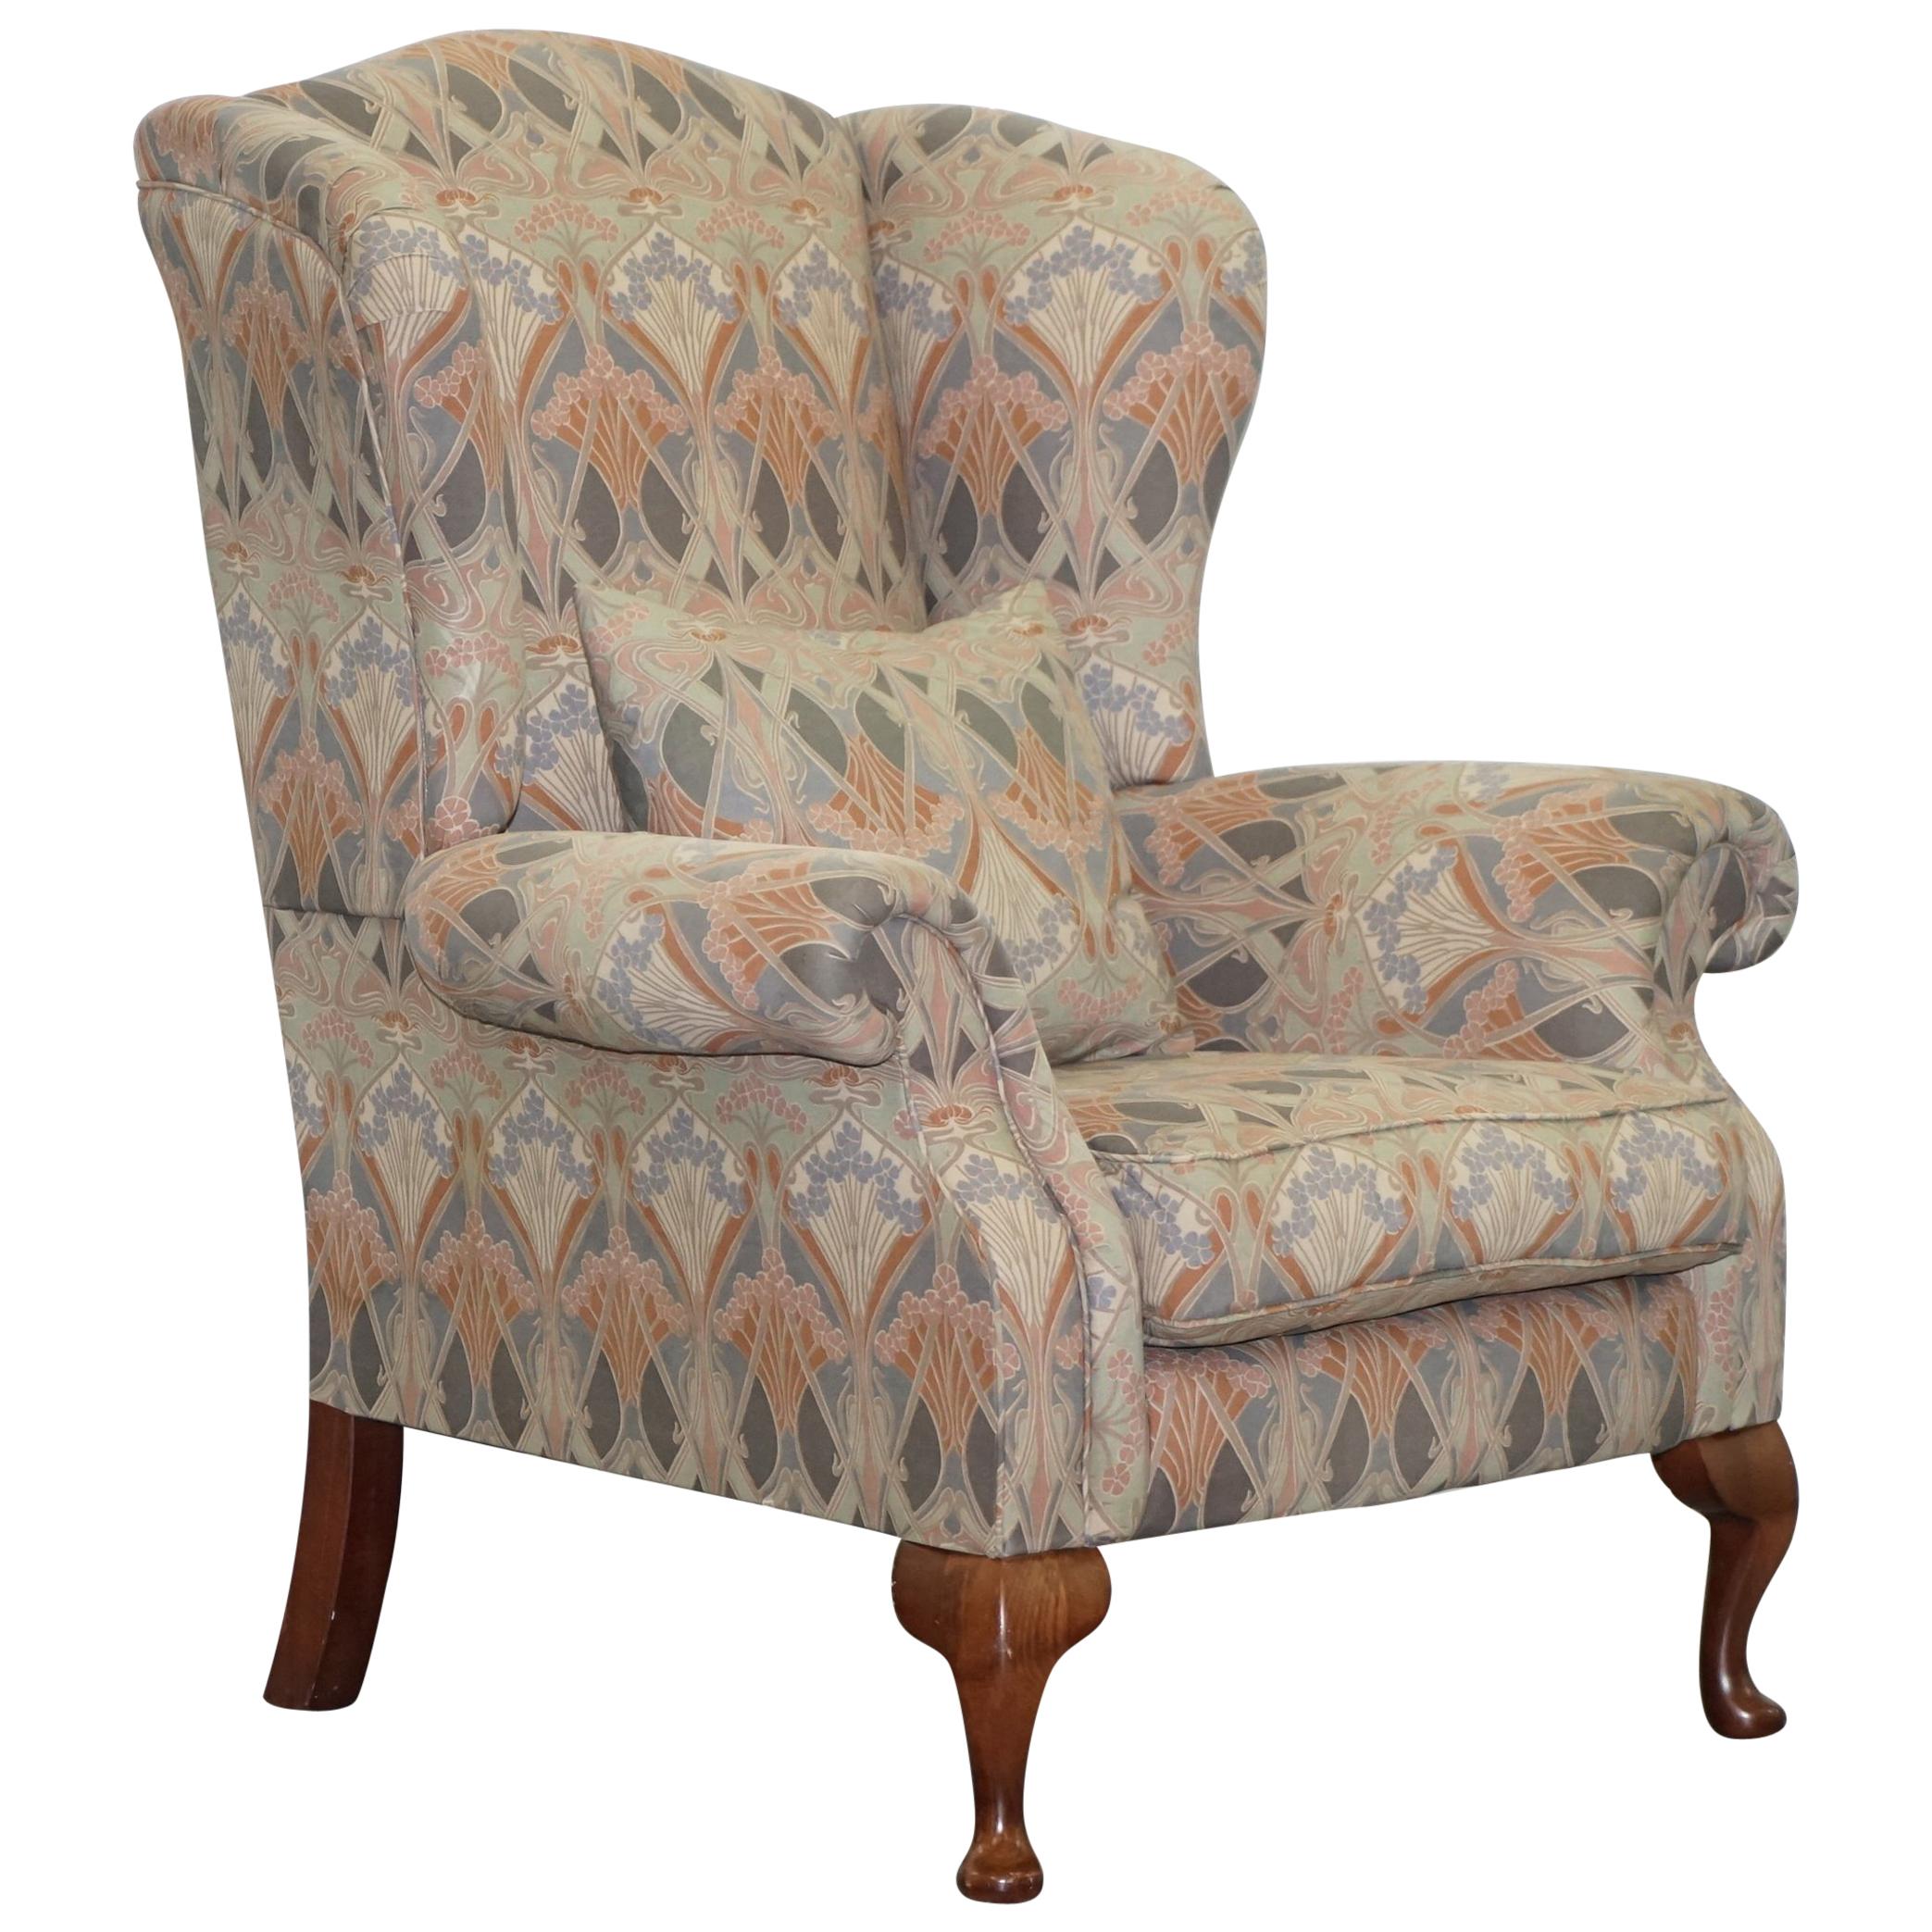 Rare Original Vintage Liberty London Ianthe Upholstered Wingback Armchair